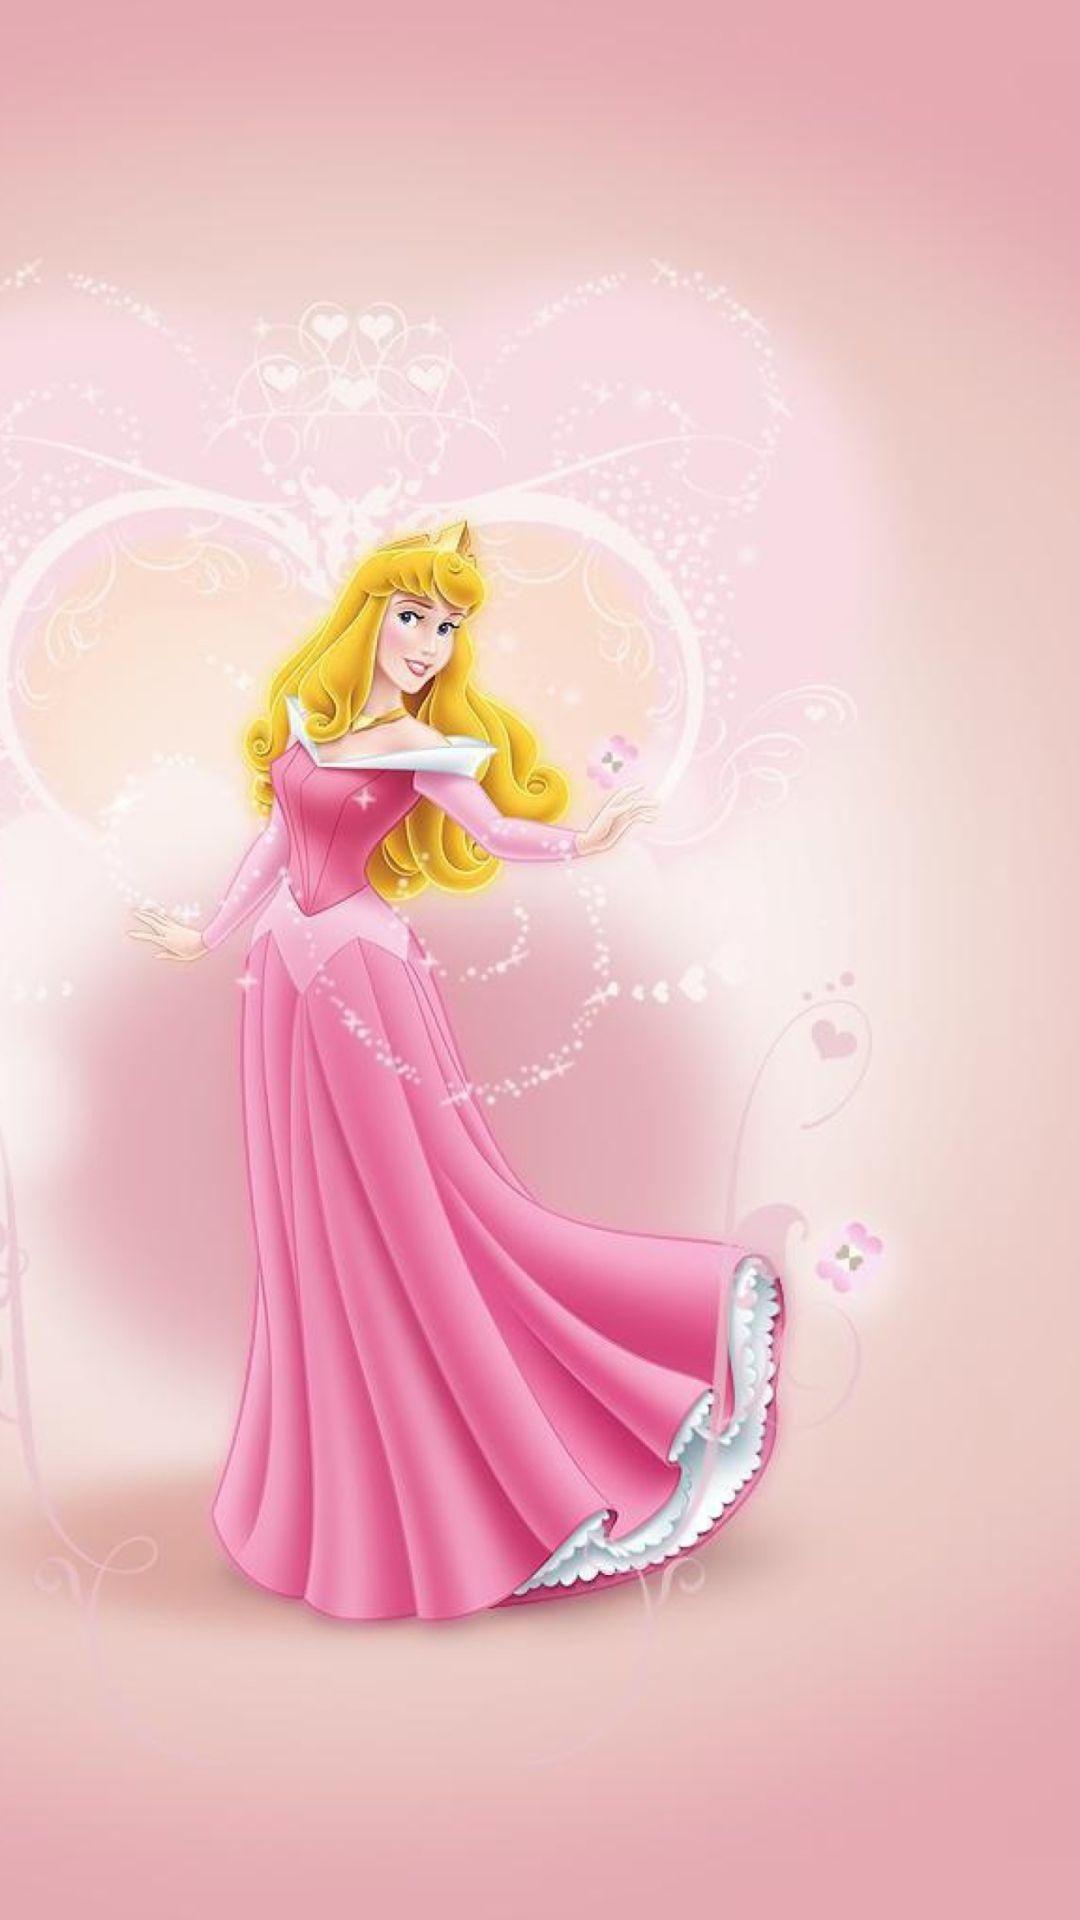 Disney Princesses Iphone Wallpapers Top Free Disney Princesses Iphone Backgrounds Wallpaperaccess